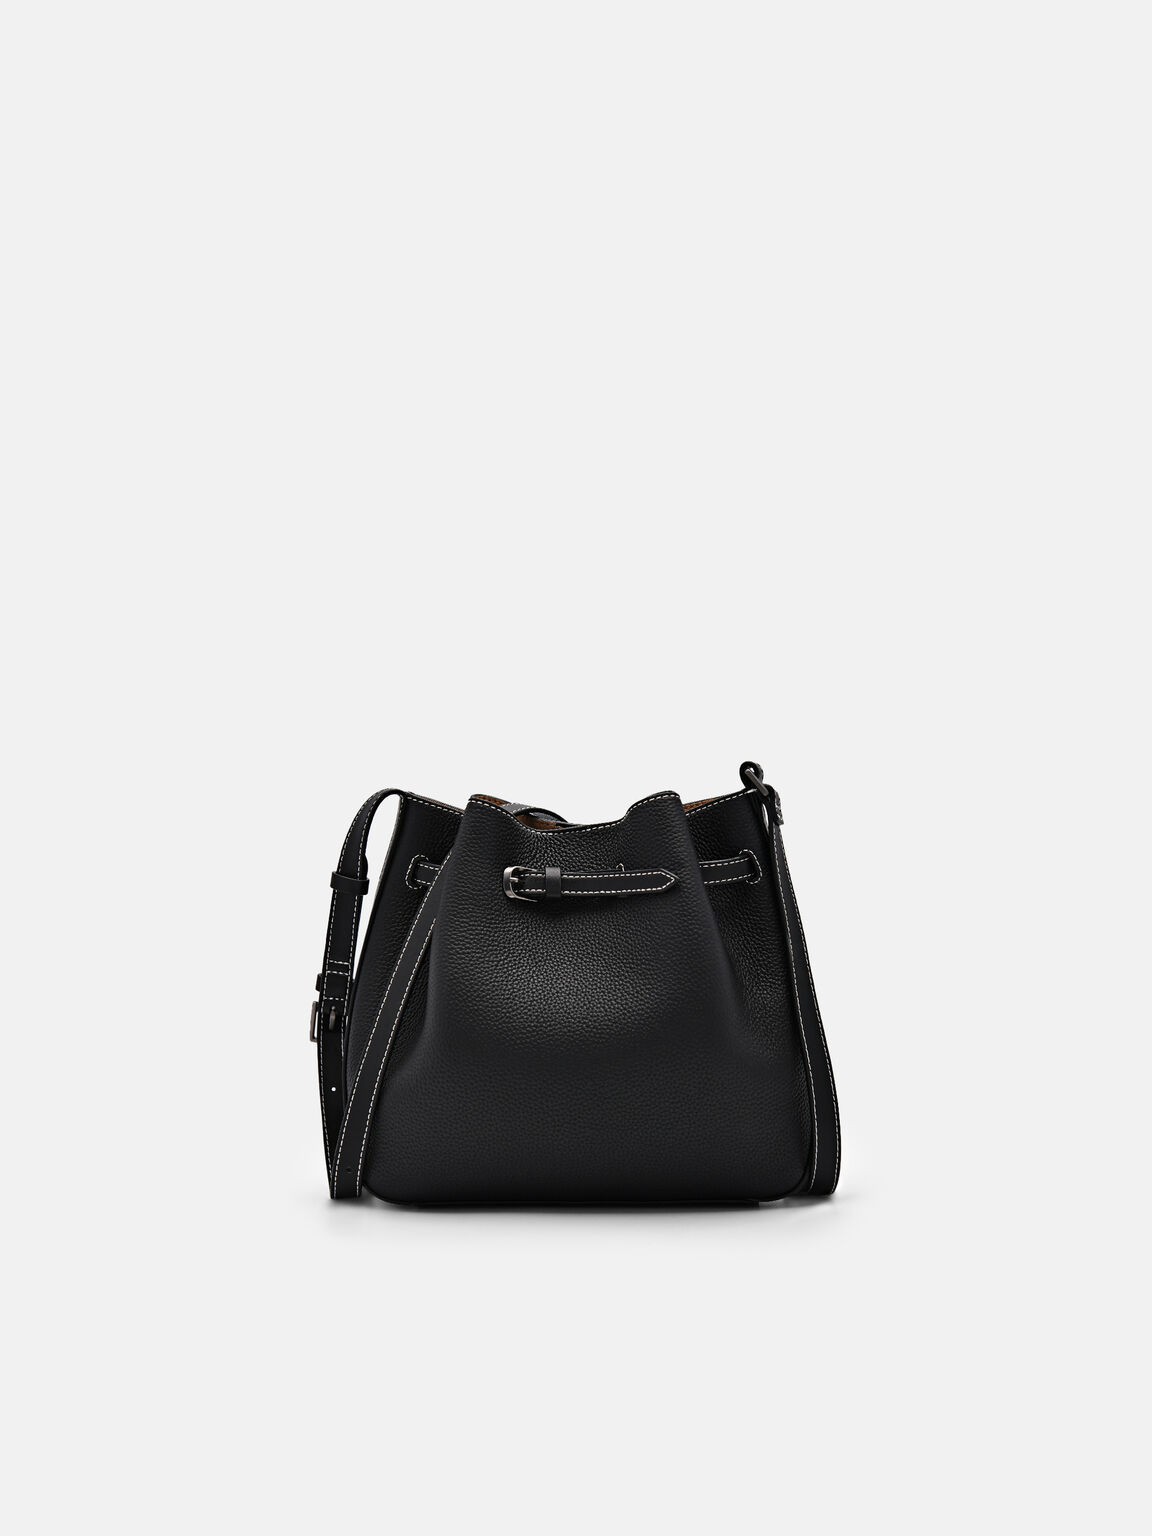 Helix Leather Bucket Bag, Black, hi-res